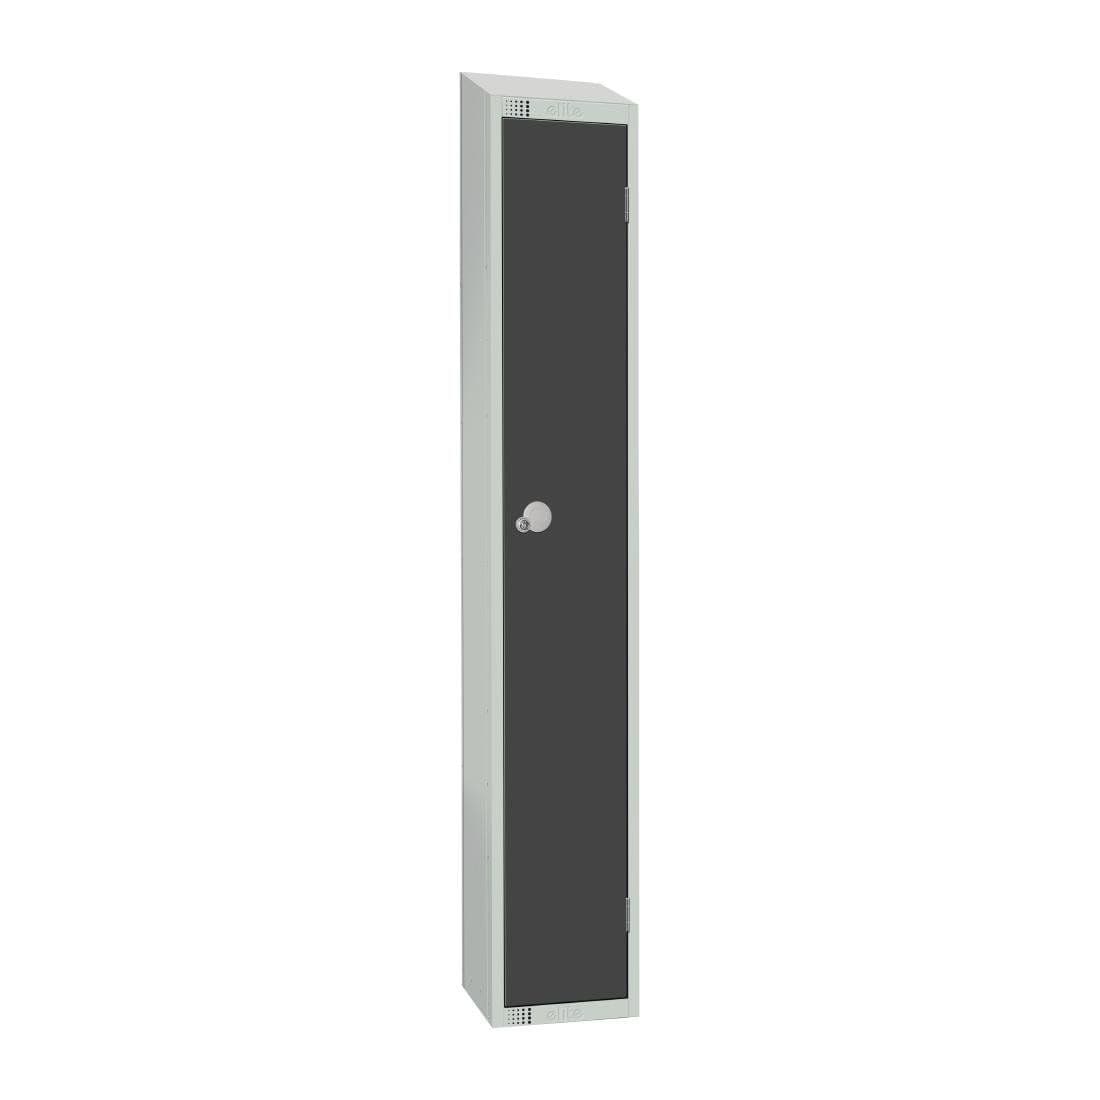 GR677-CN Elite Single Door Coin Return Locker Graphite Grey JD Catering Equipment Solutions Ltd